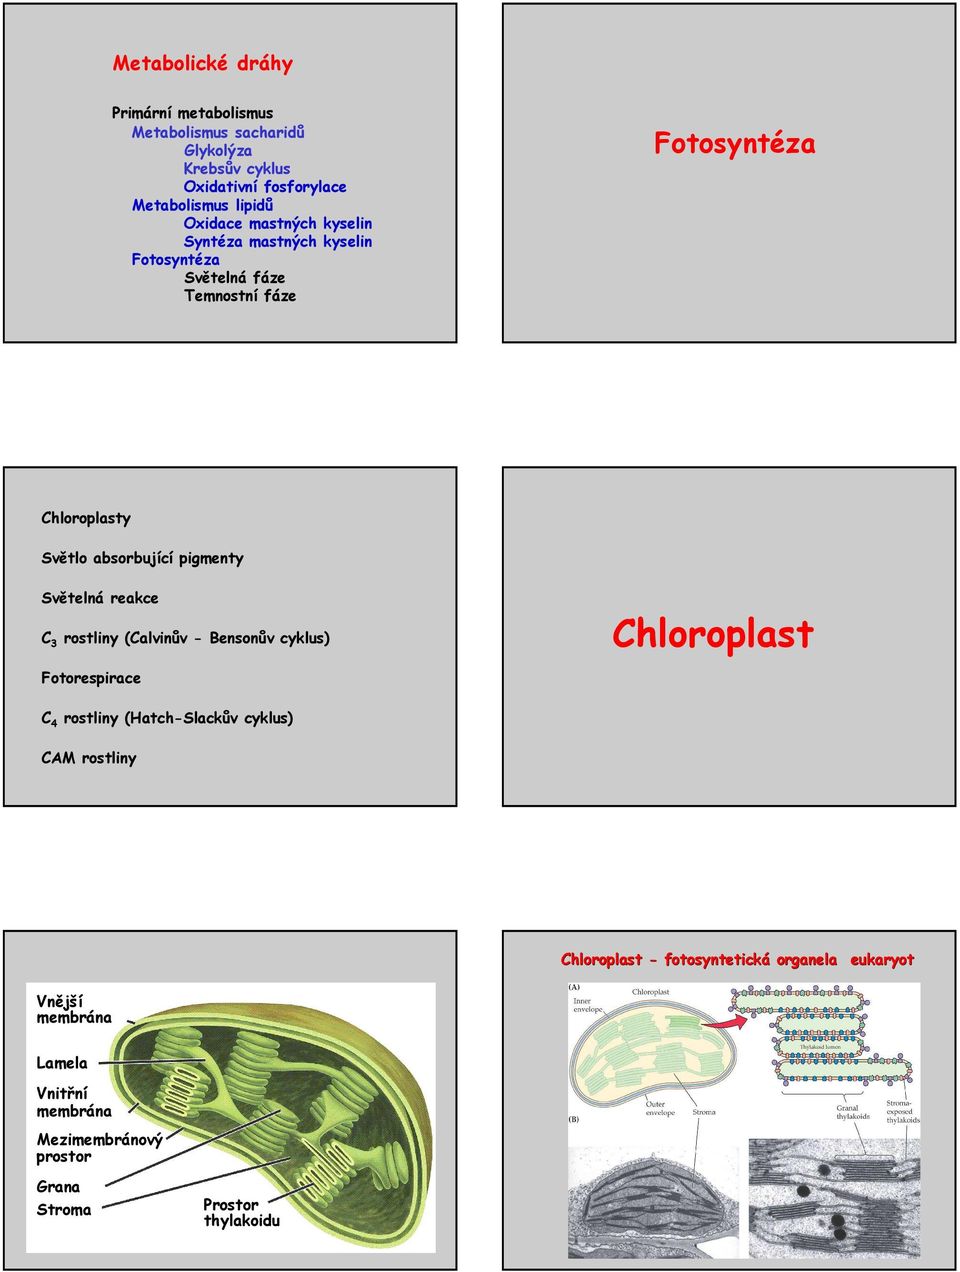 hloroplast 4 rostliny (atchslackův cyklus) AM rostliny hloroplast fotosyntetická organela